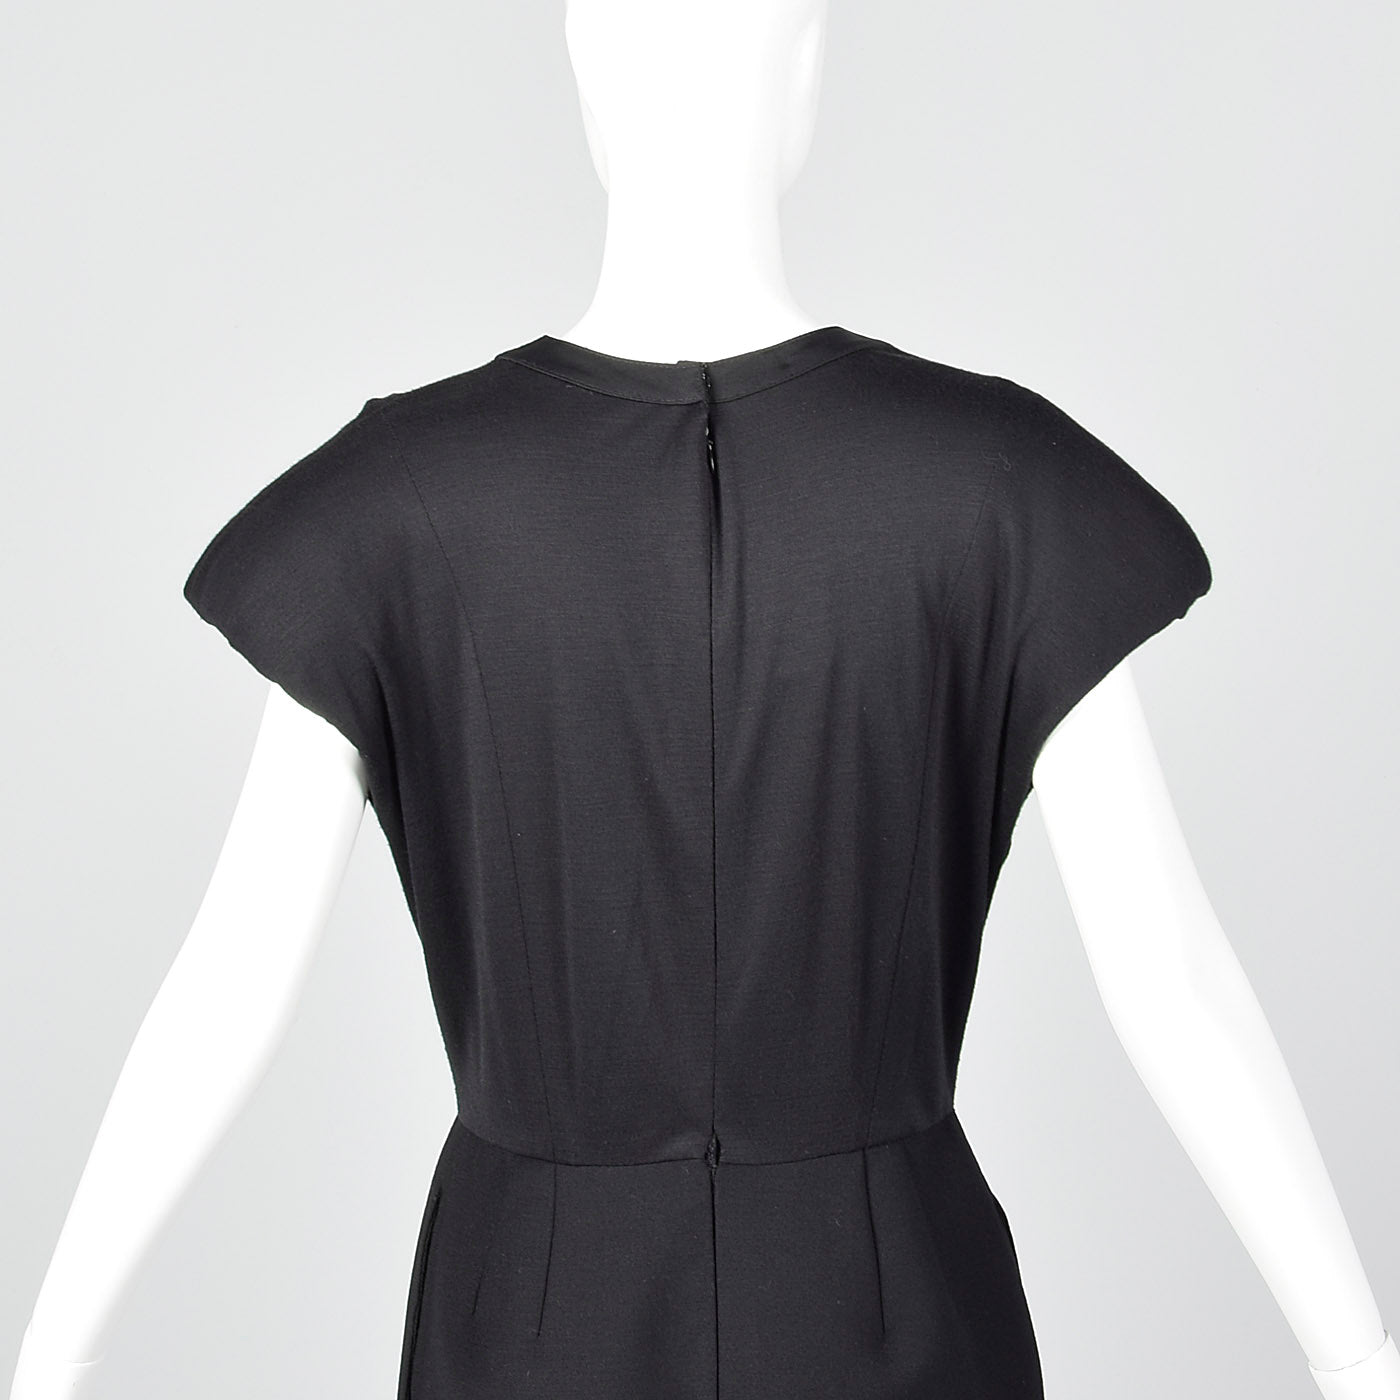 1980s Geoffrey Beene Black Dress with Shaped Shoulders